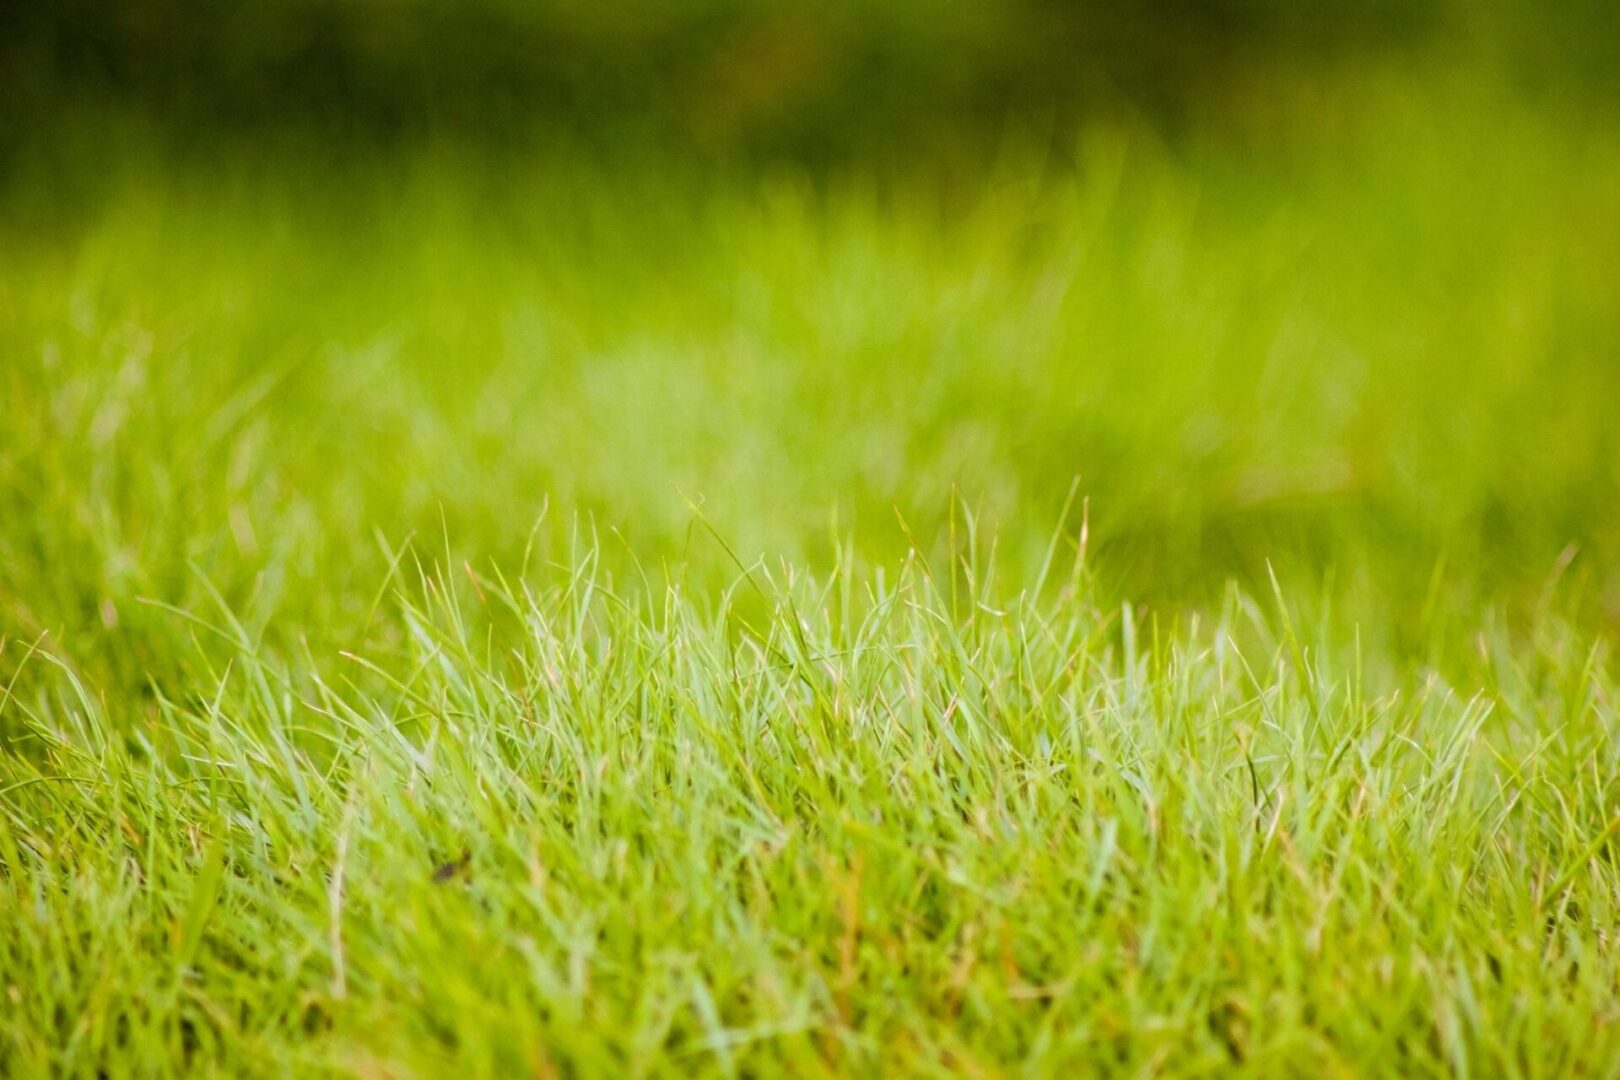 A close-up view of grass